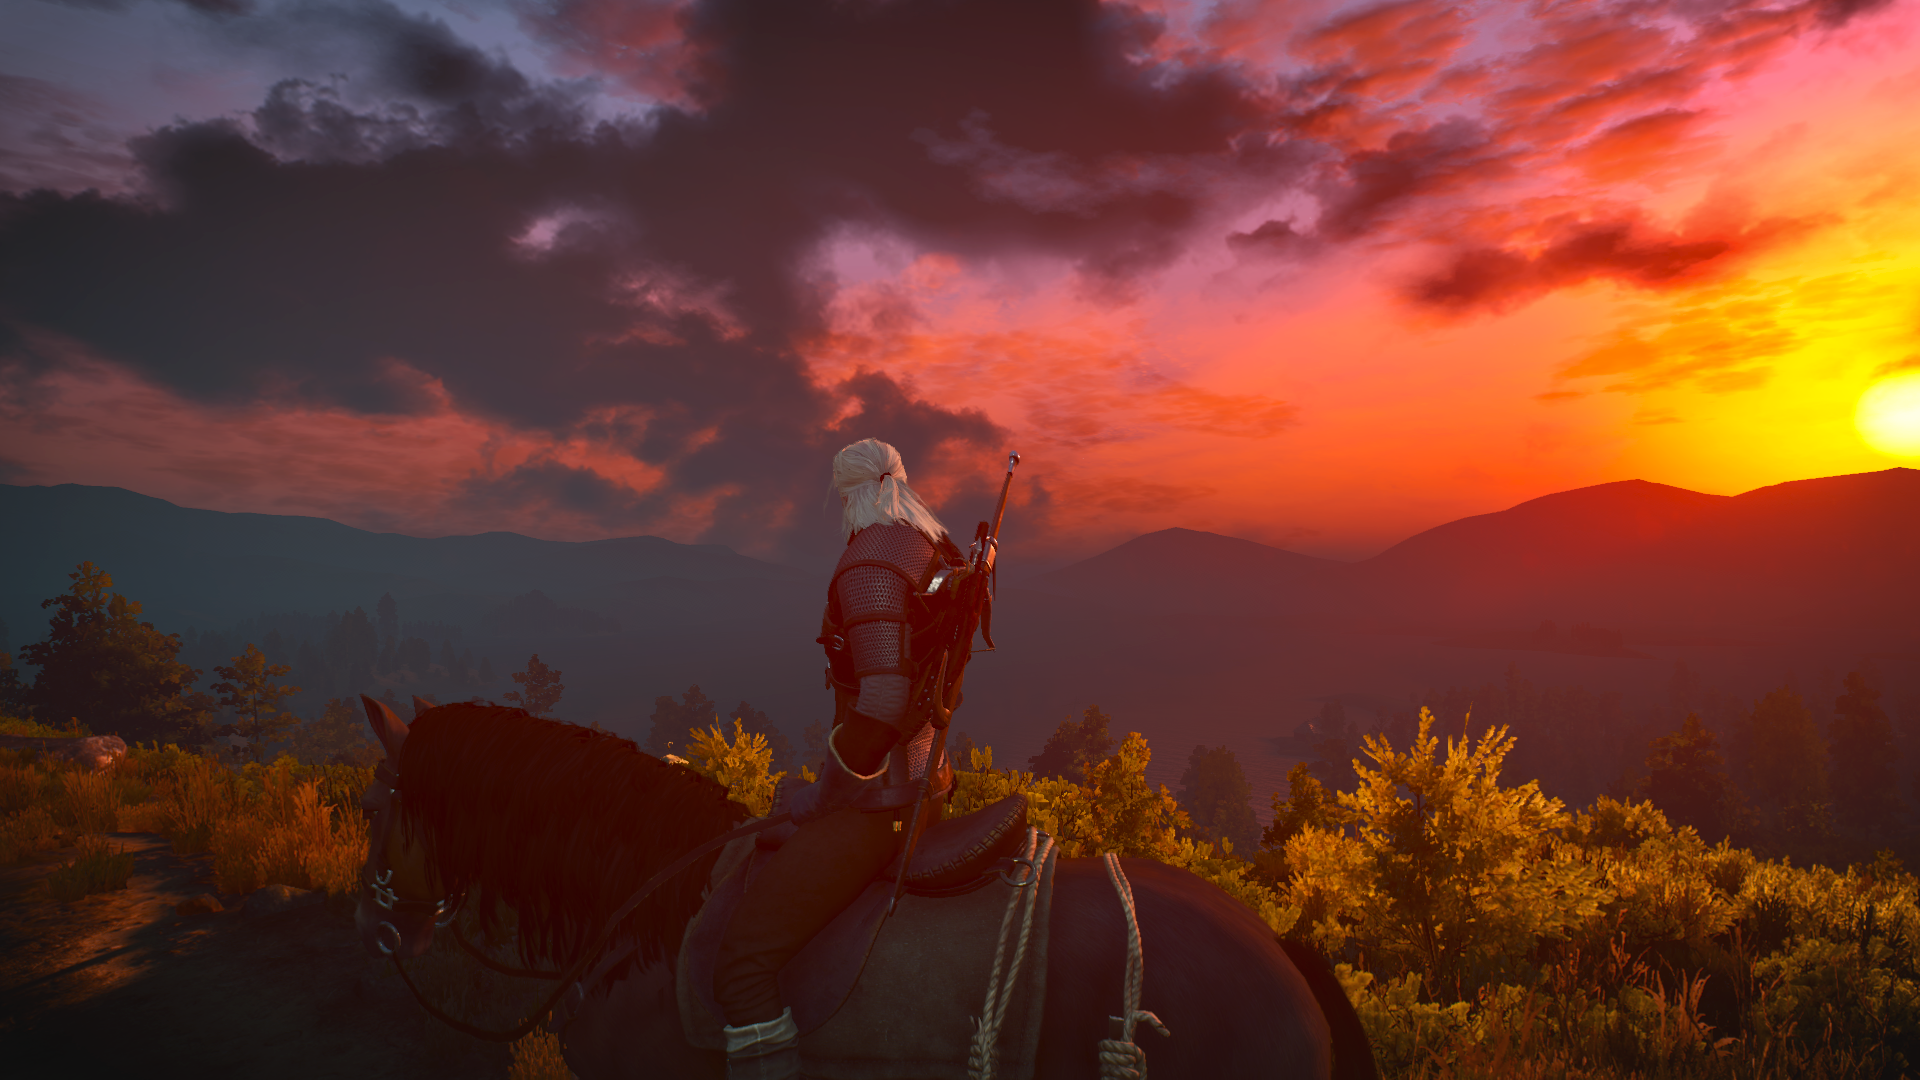 General 1920x1080 The Witcher 3: Wild Hunt video games PC gaming orange sky screen shot Geralt of Rivia RPG video game landscape